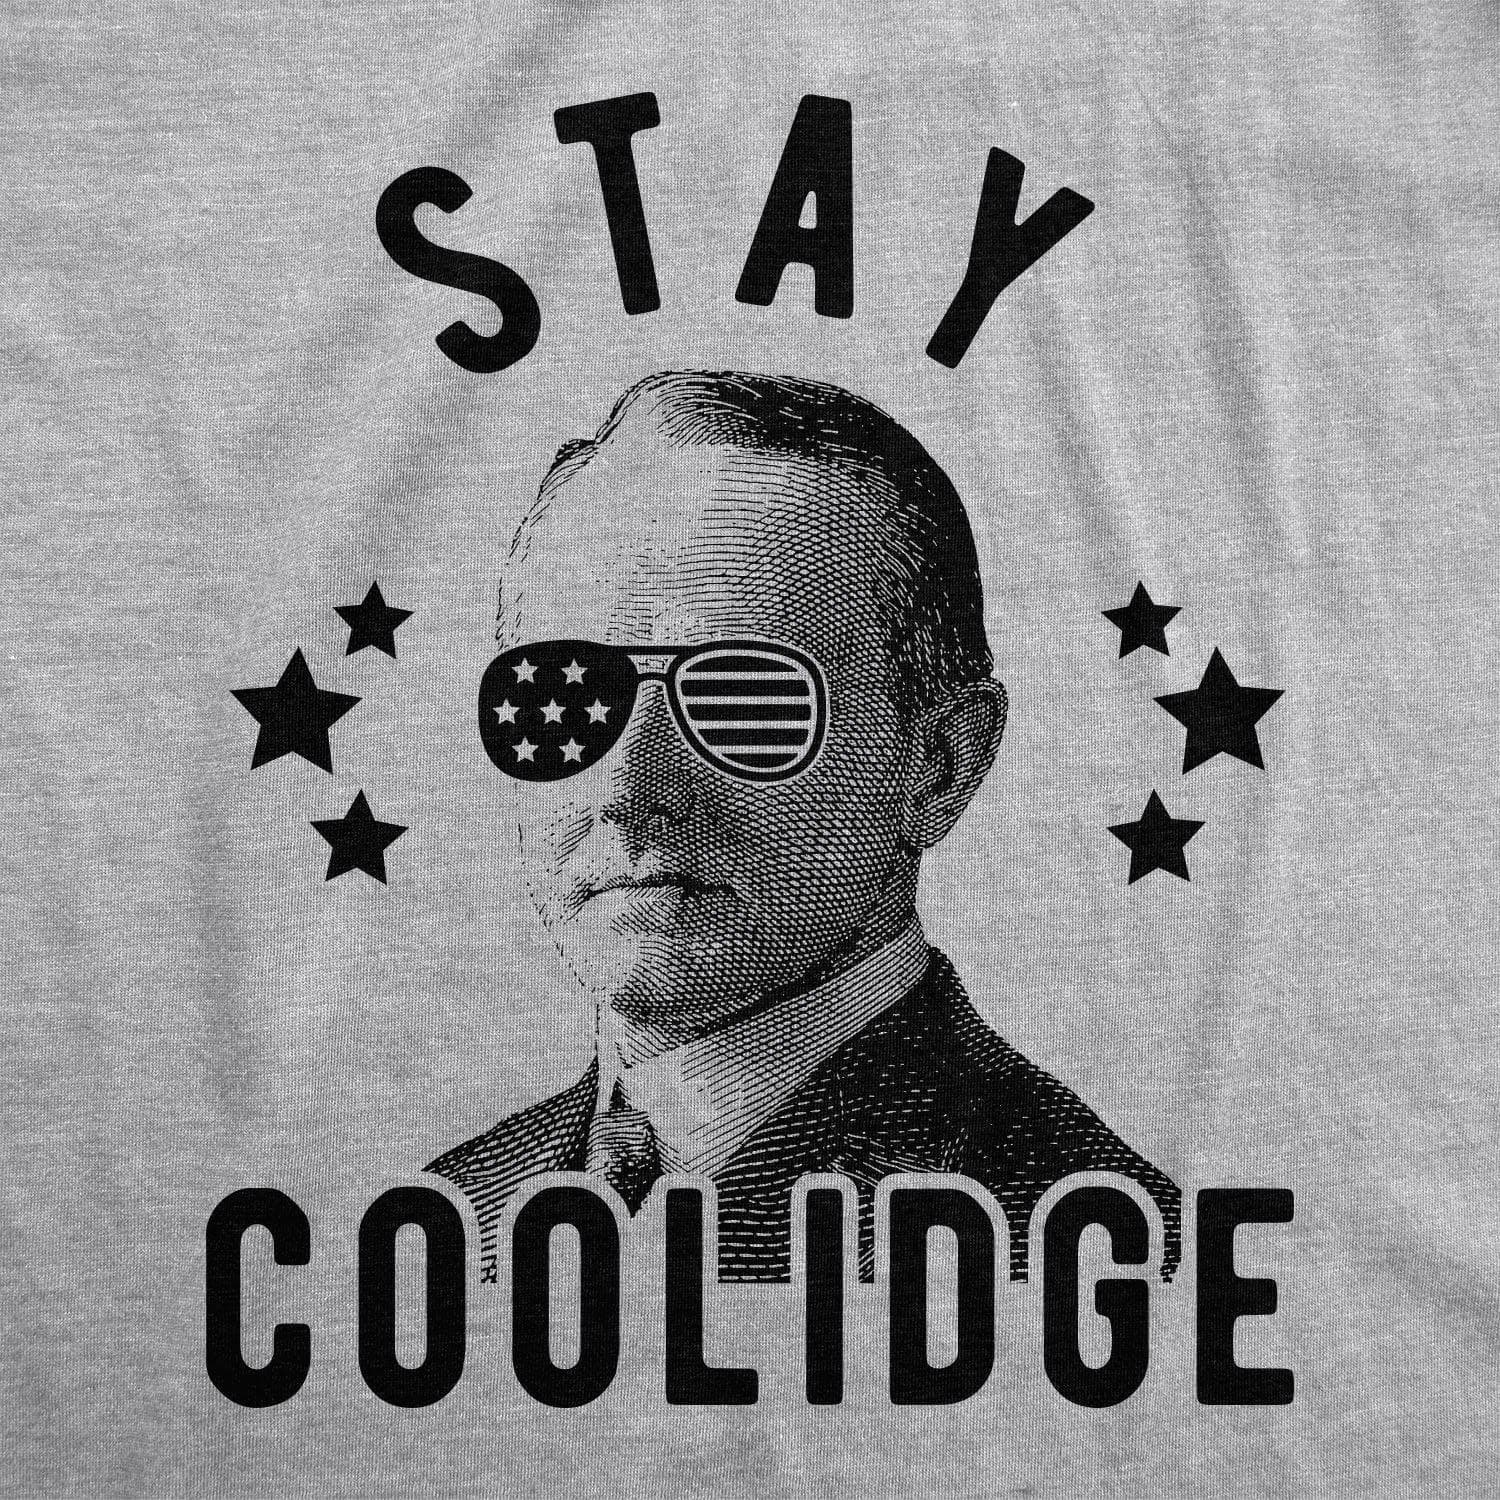 Stay Coolidge Men's Tshirt - Crazy Dog T-Shirts